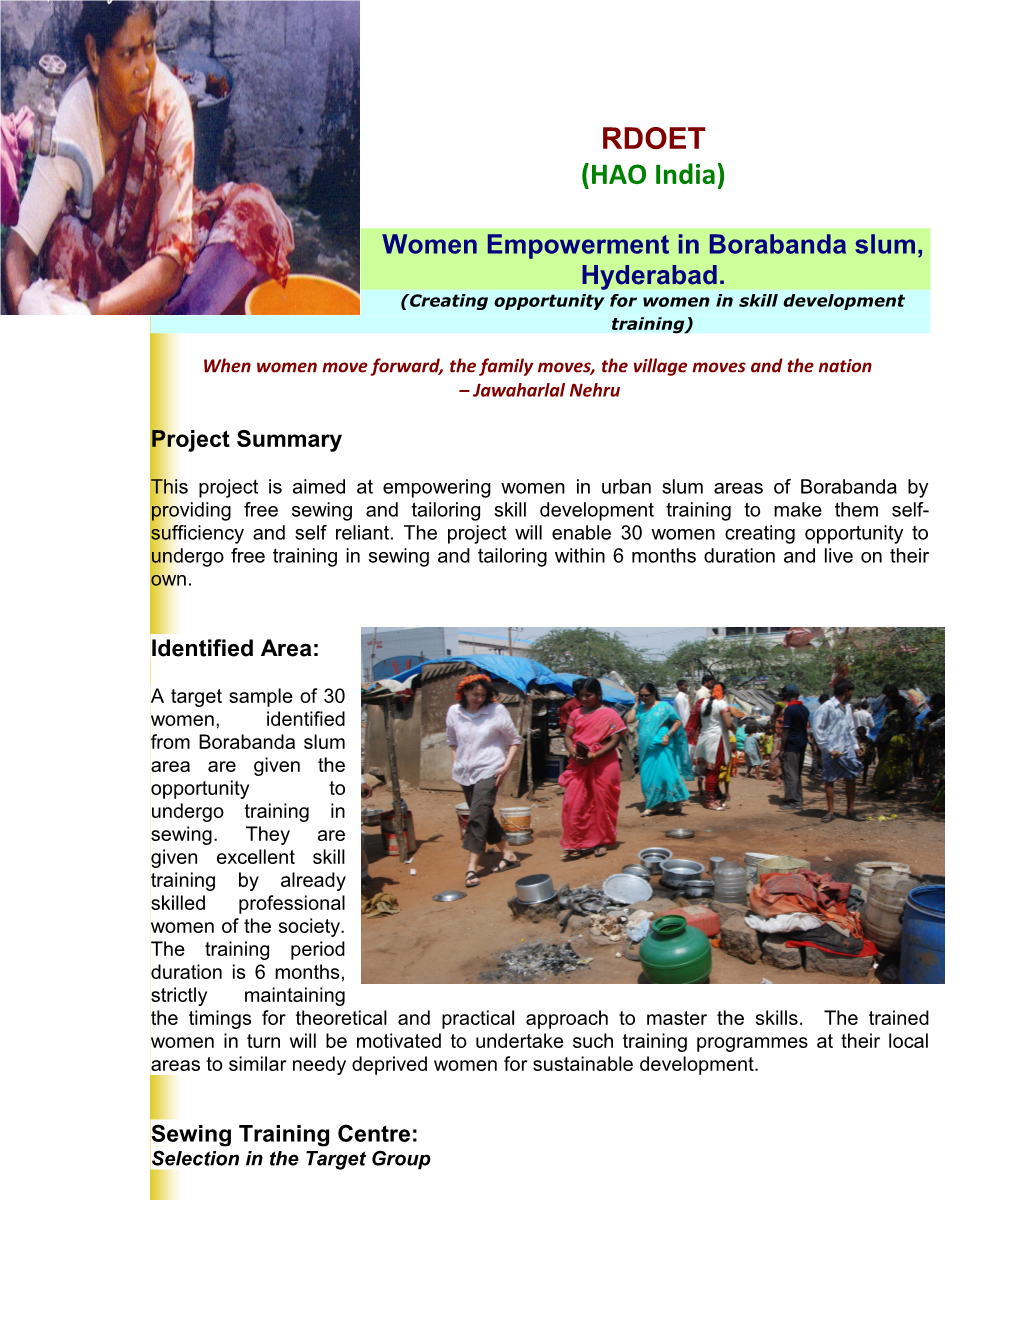 Women Empowerment in Borabanda Slum, Hyderabad